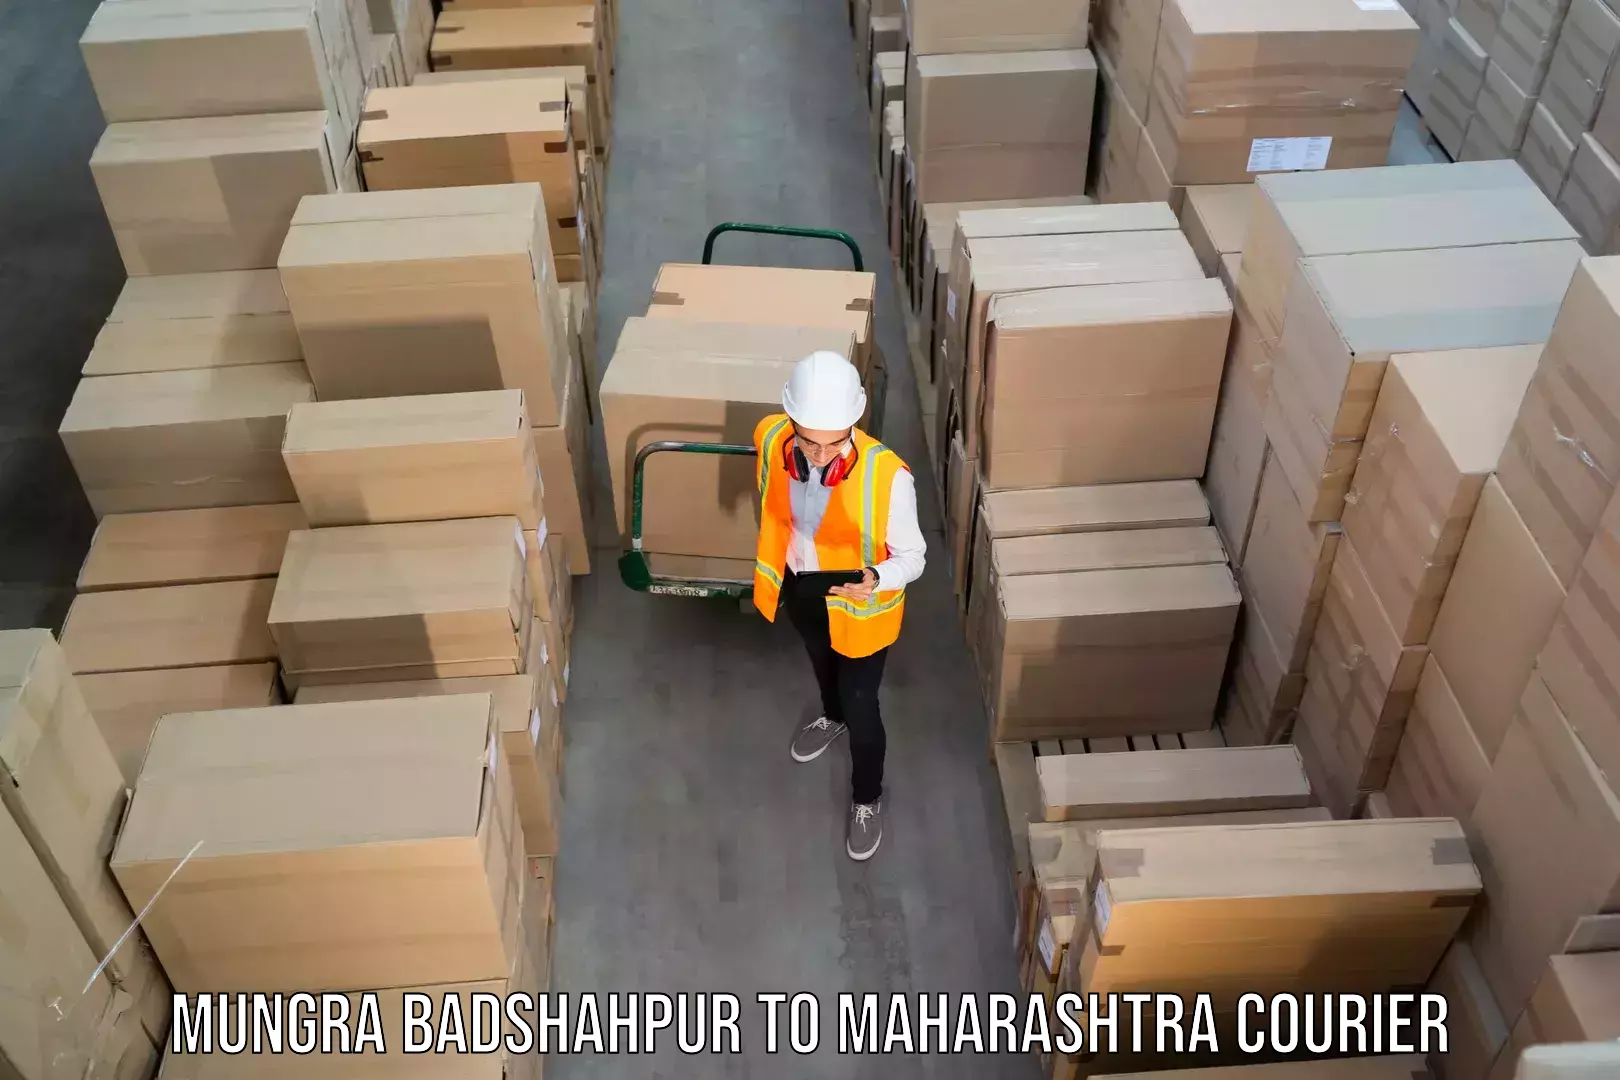 Reliable delivery network Mungra Badshahpur to Sangli